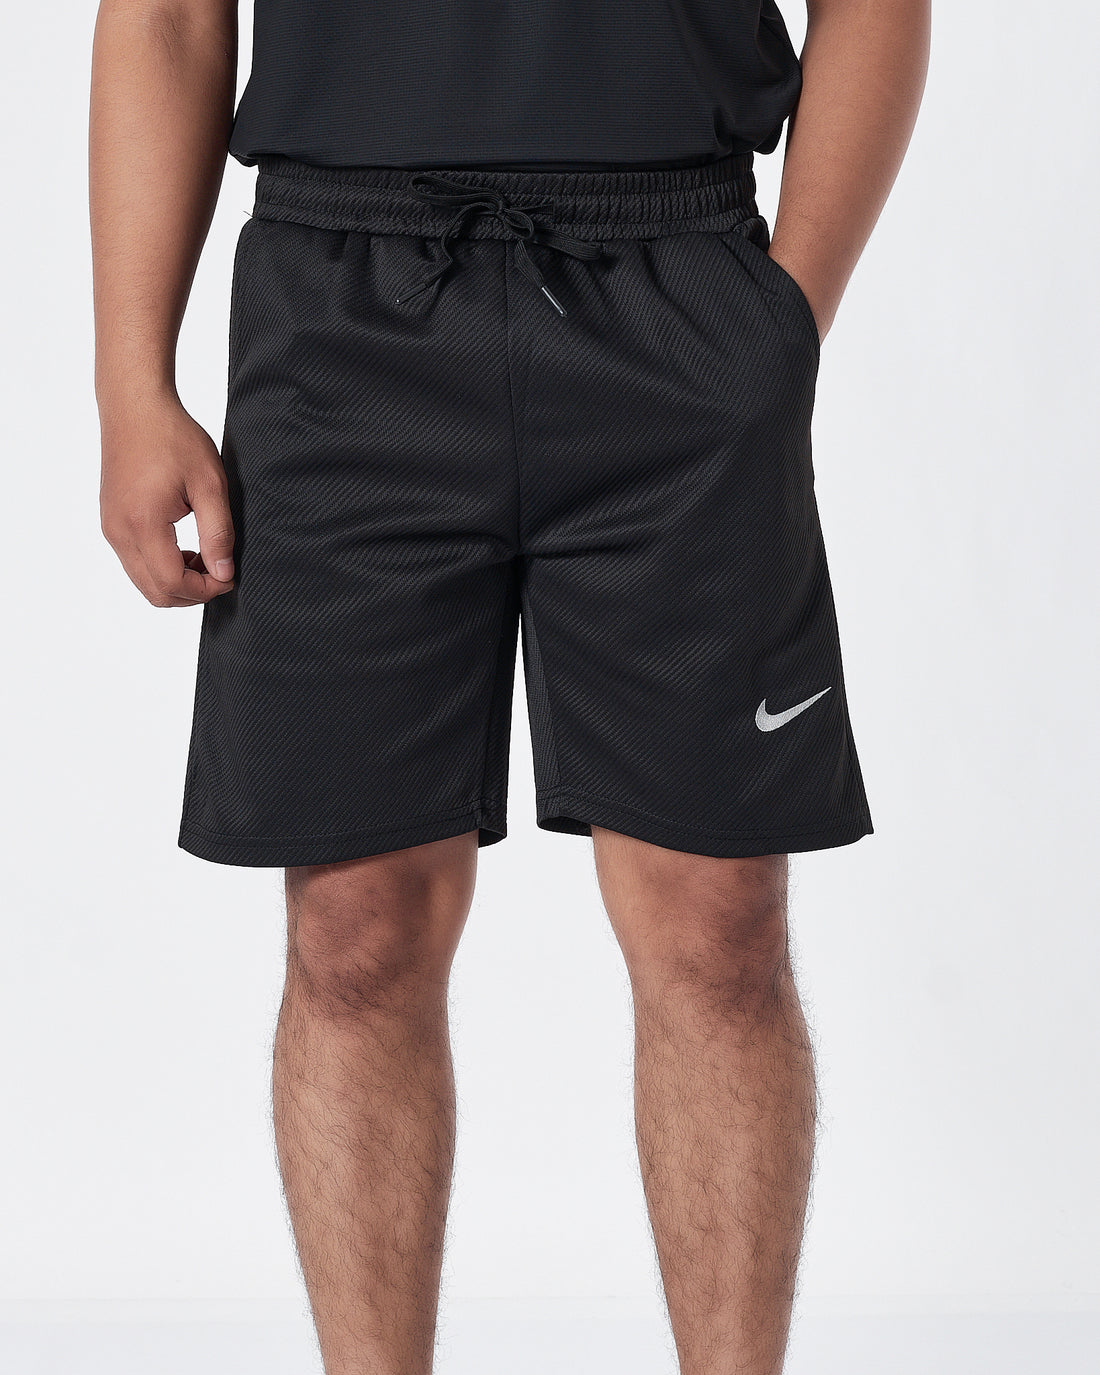 NIK Swooh Logo Printed Men Black Track Shorts 13.90